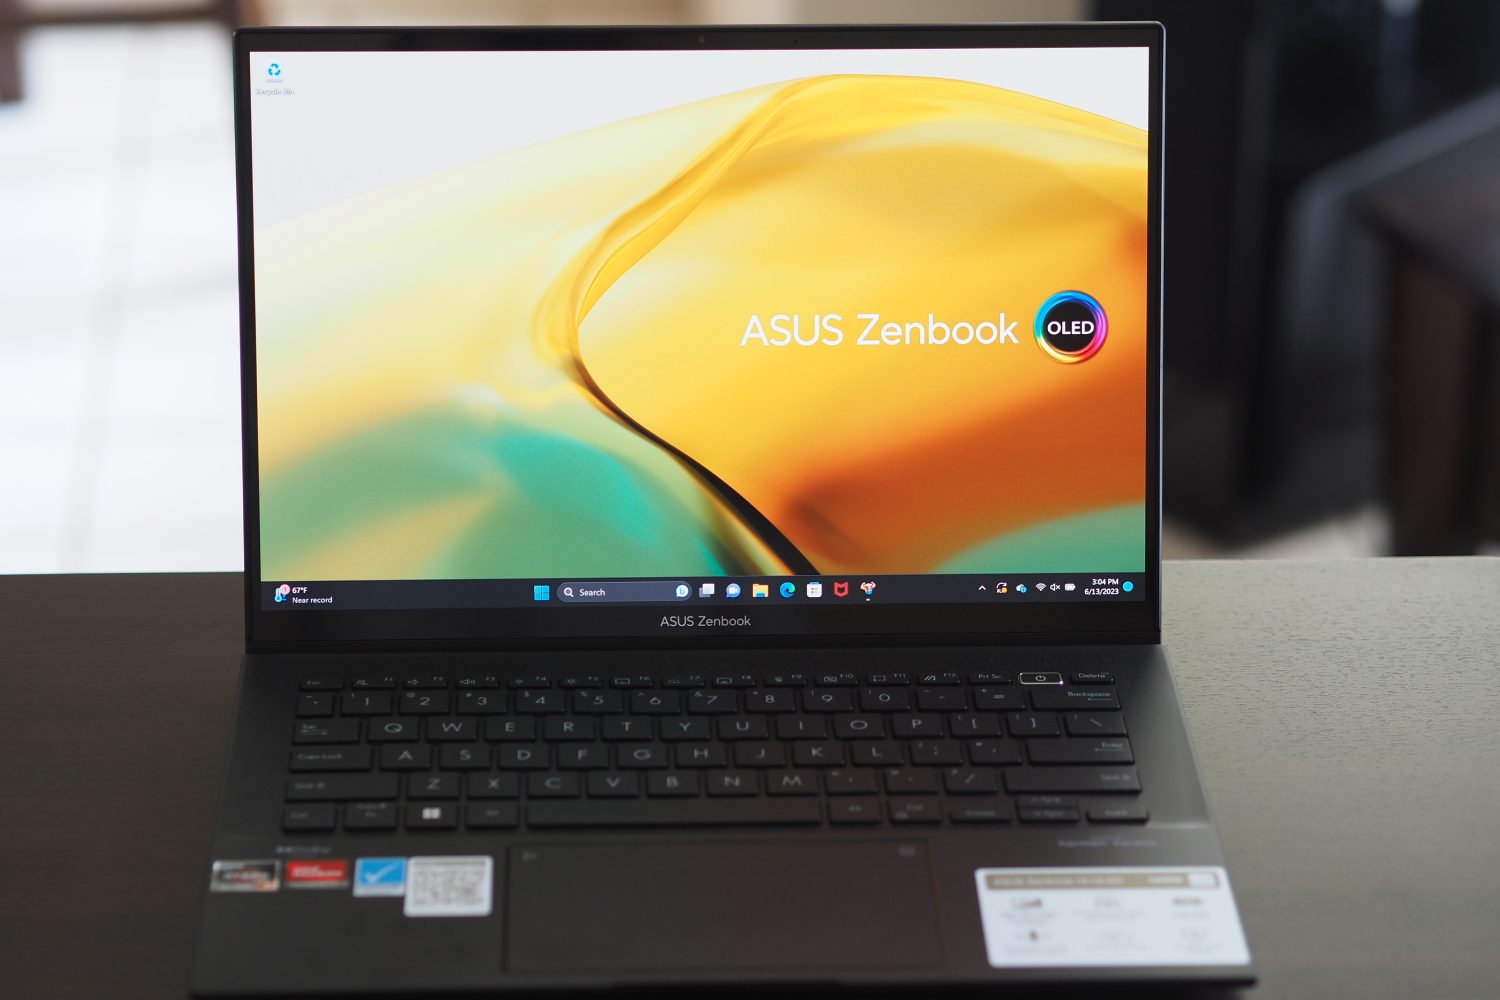 Asus Zenbook Pro 15 Flip OLED review